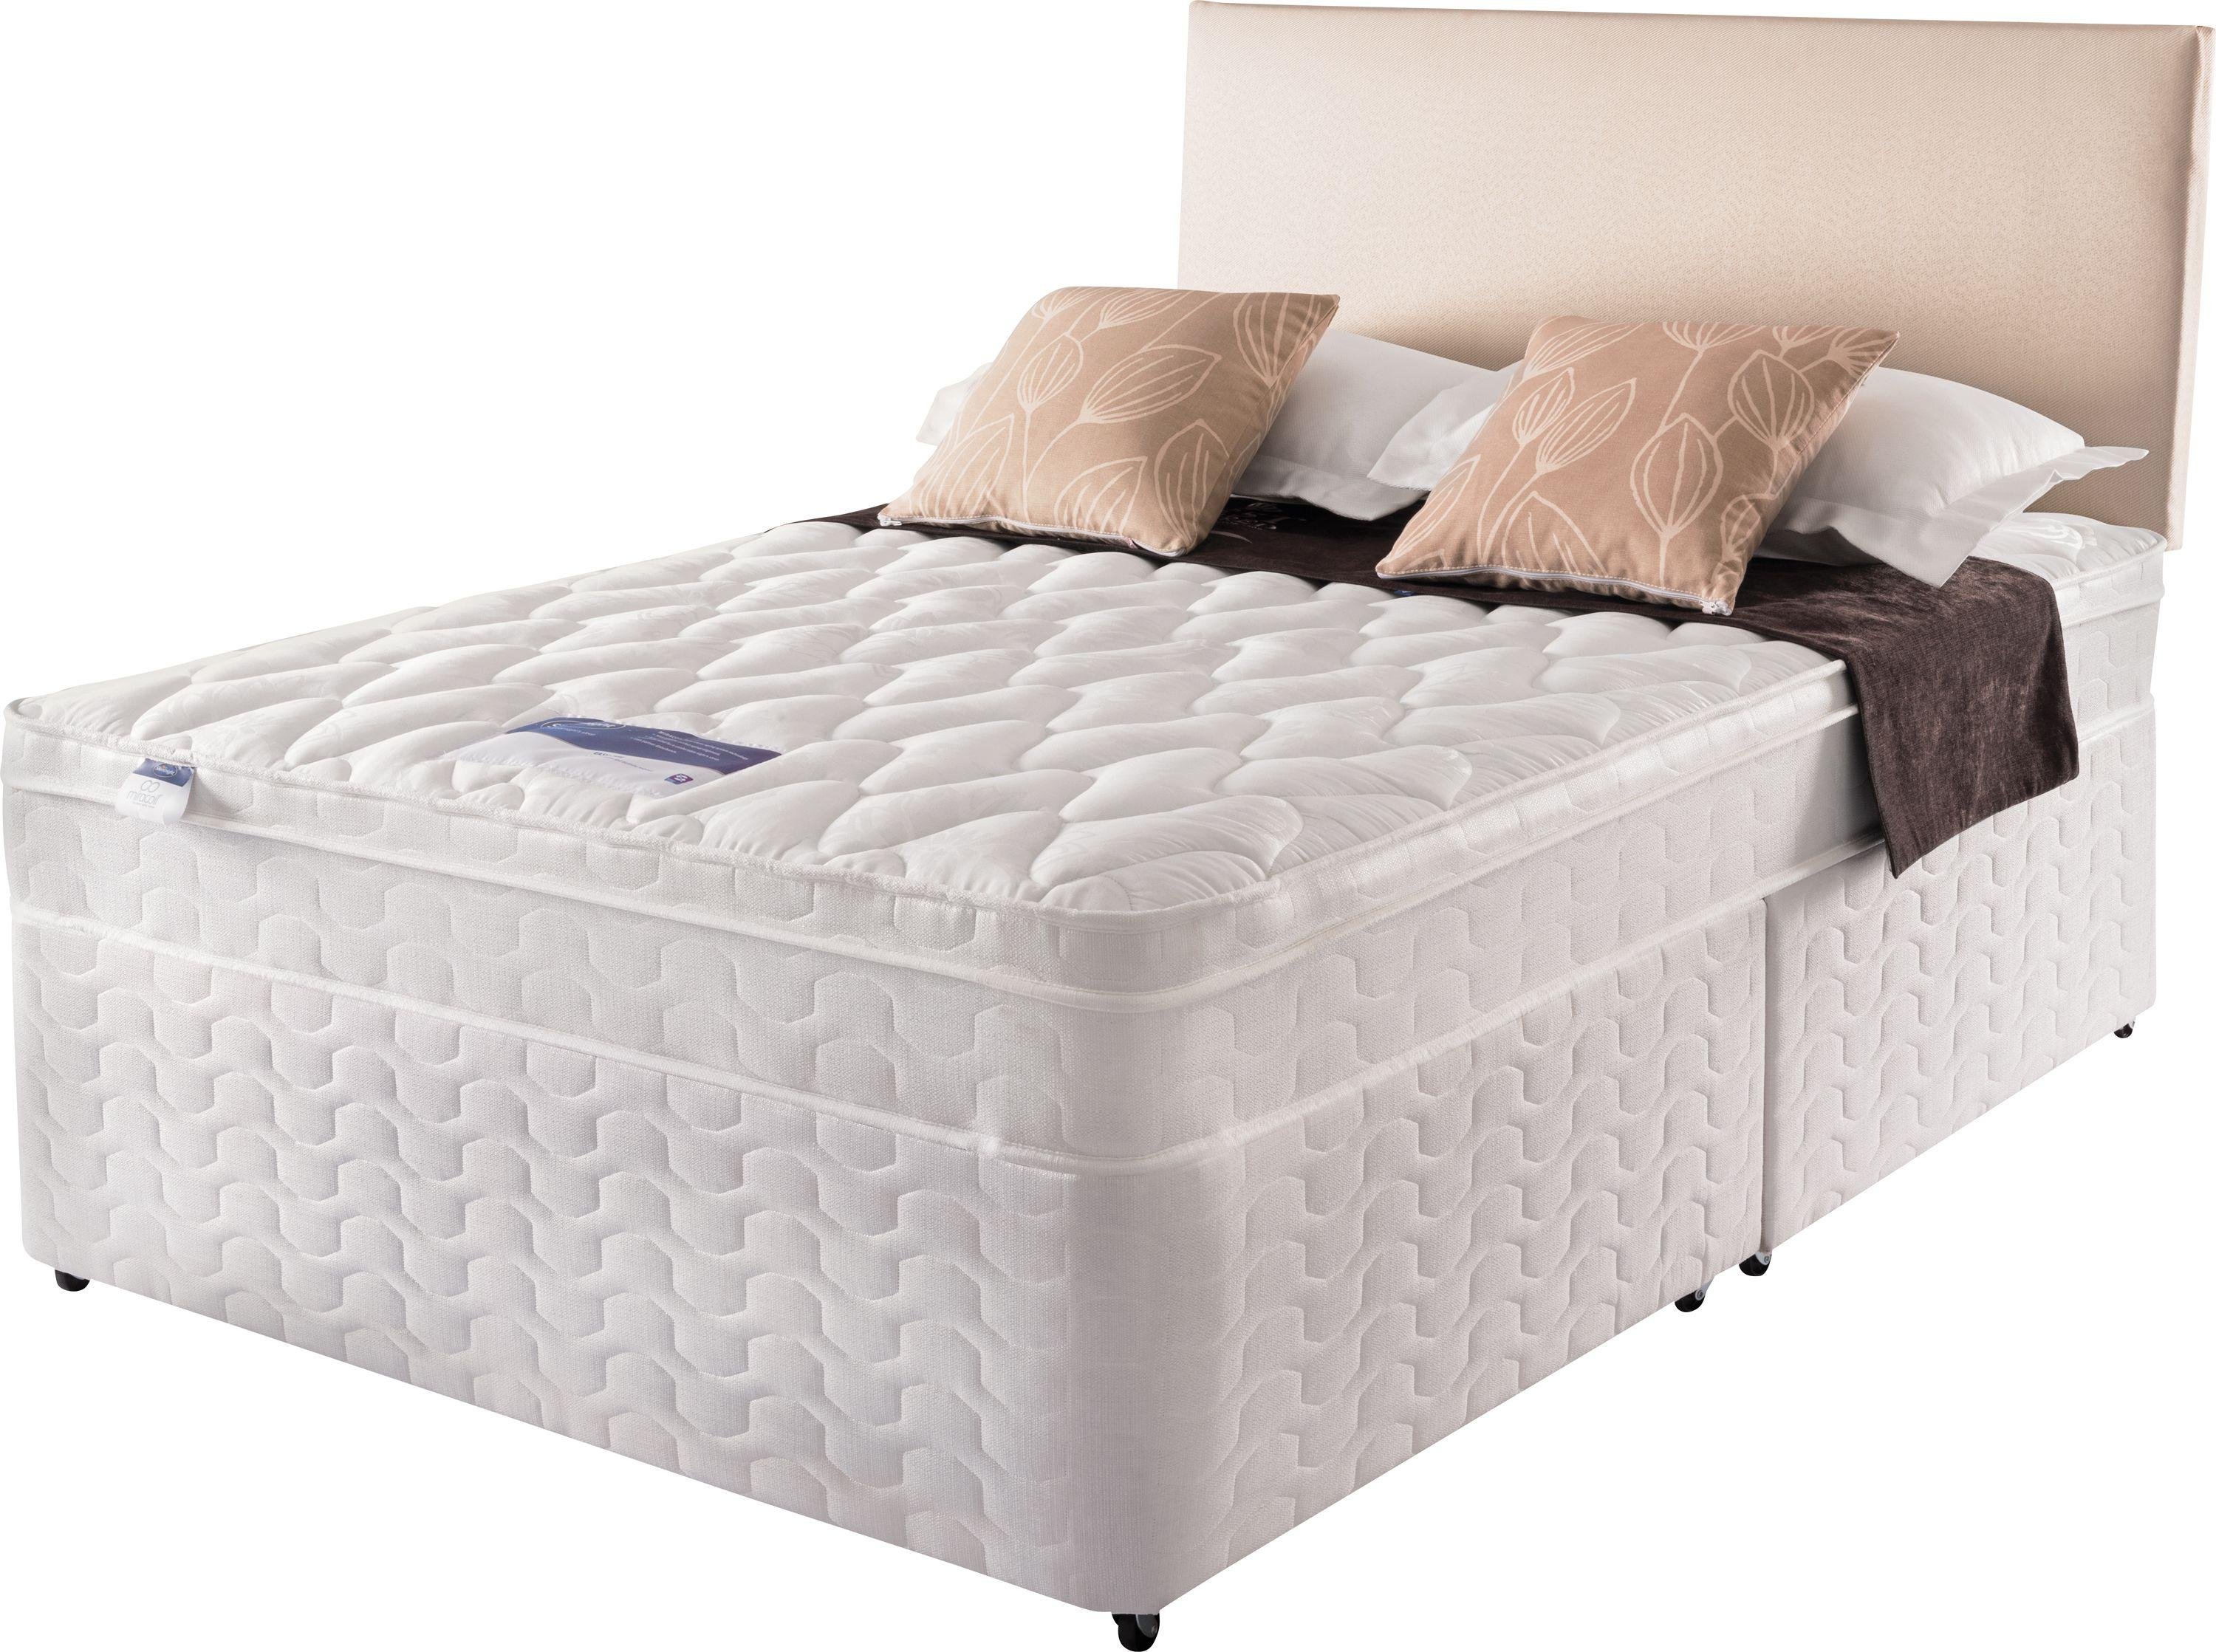 Silentnight Auckland Luxury Kingsize Divan Bed - White